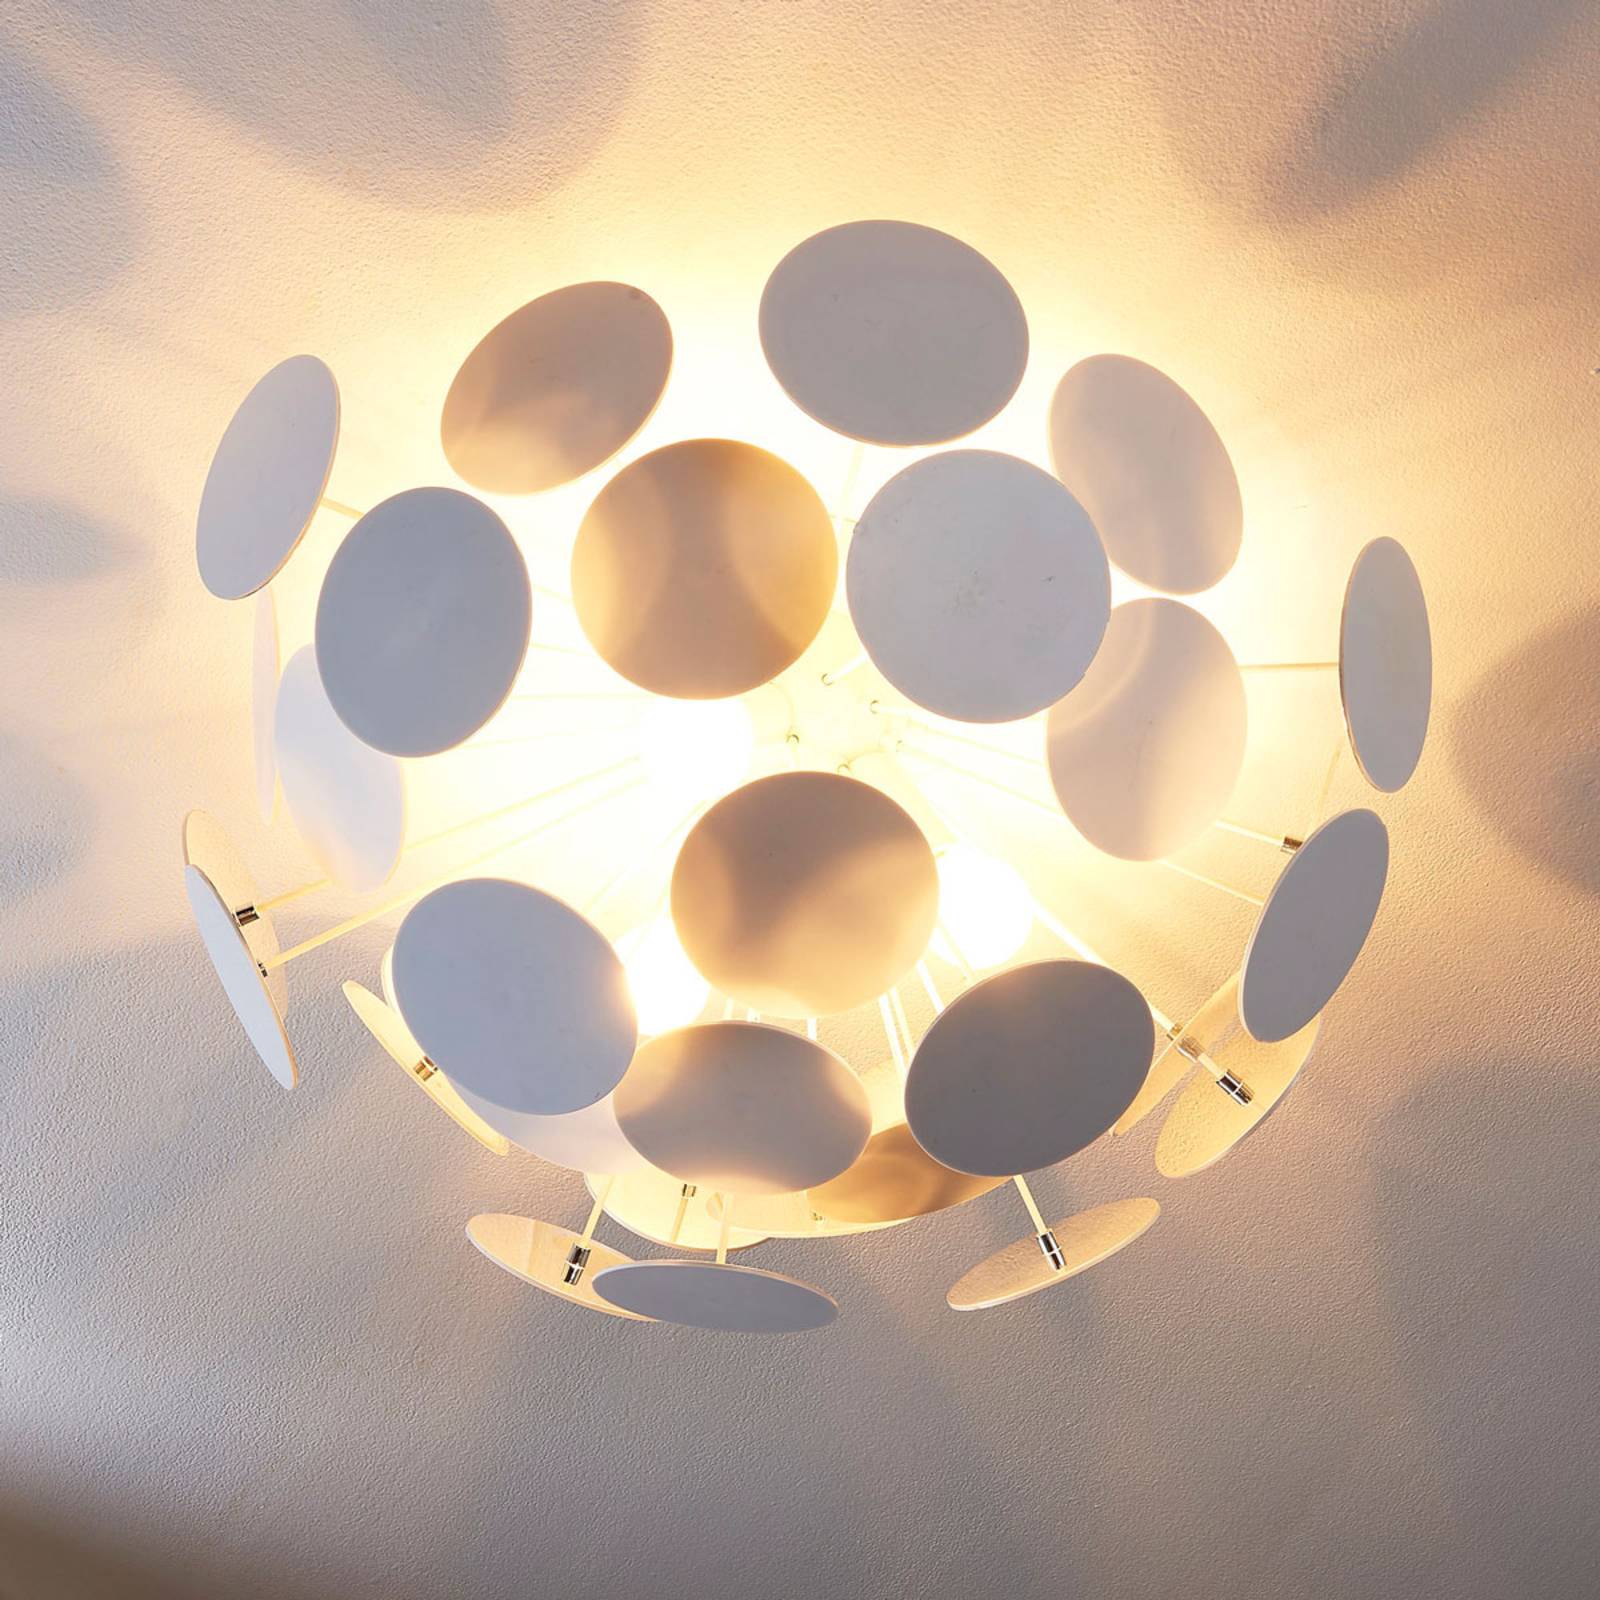 Perfect gevormde plafondlamp Kinan in wit